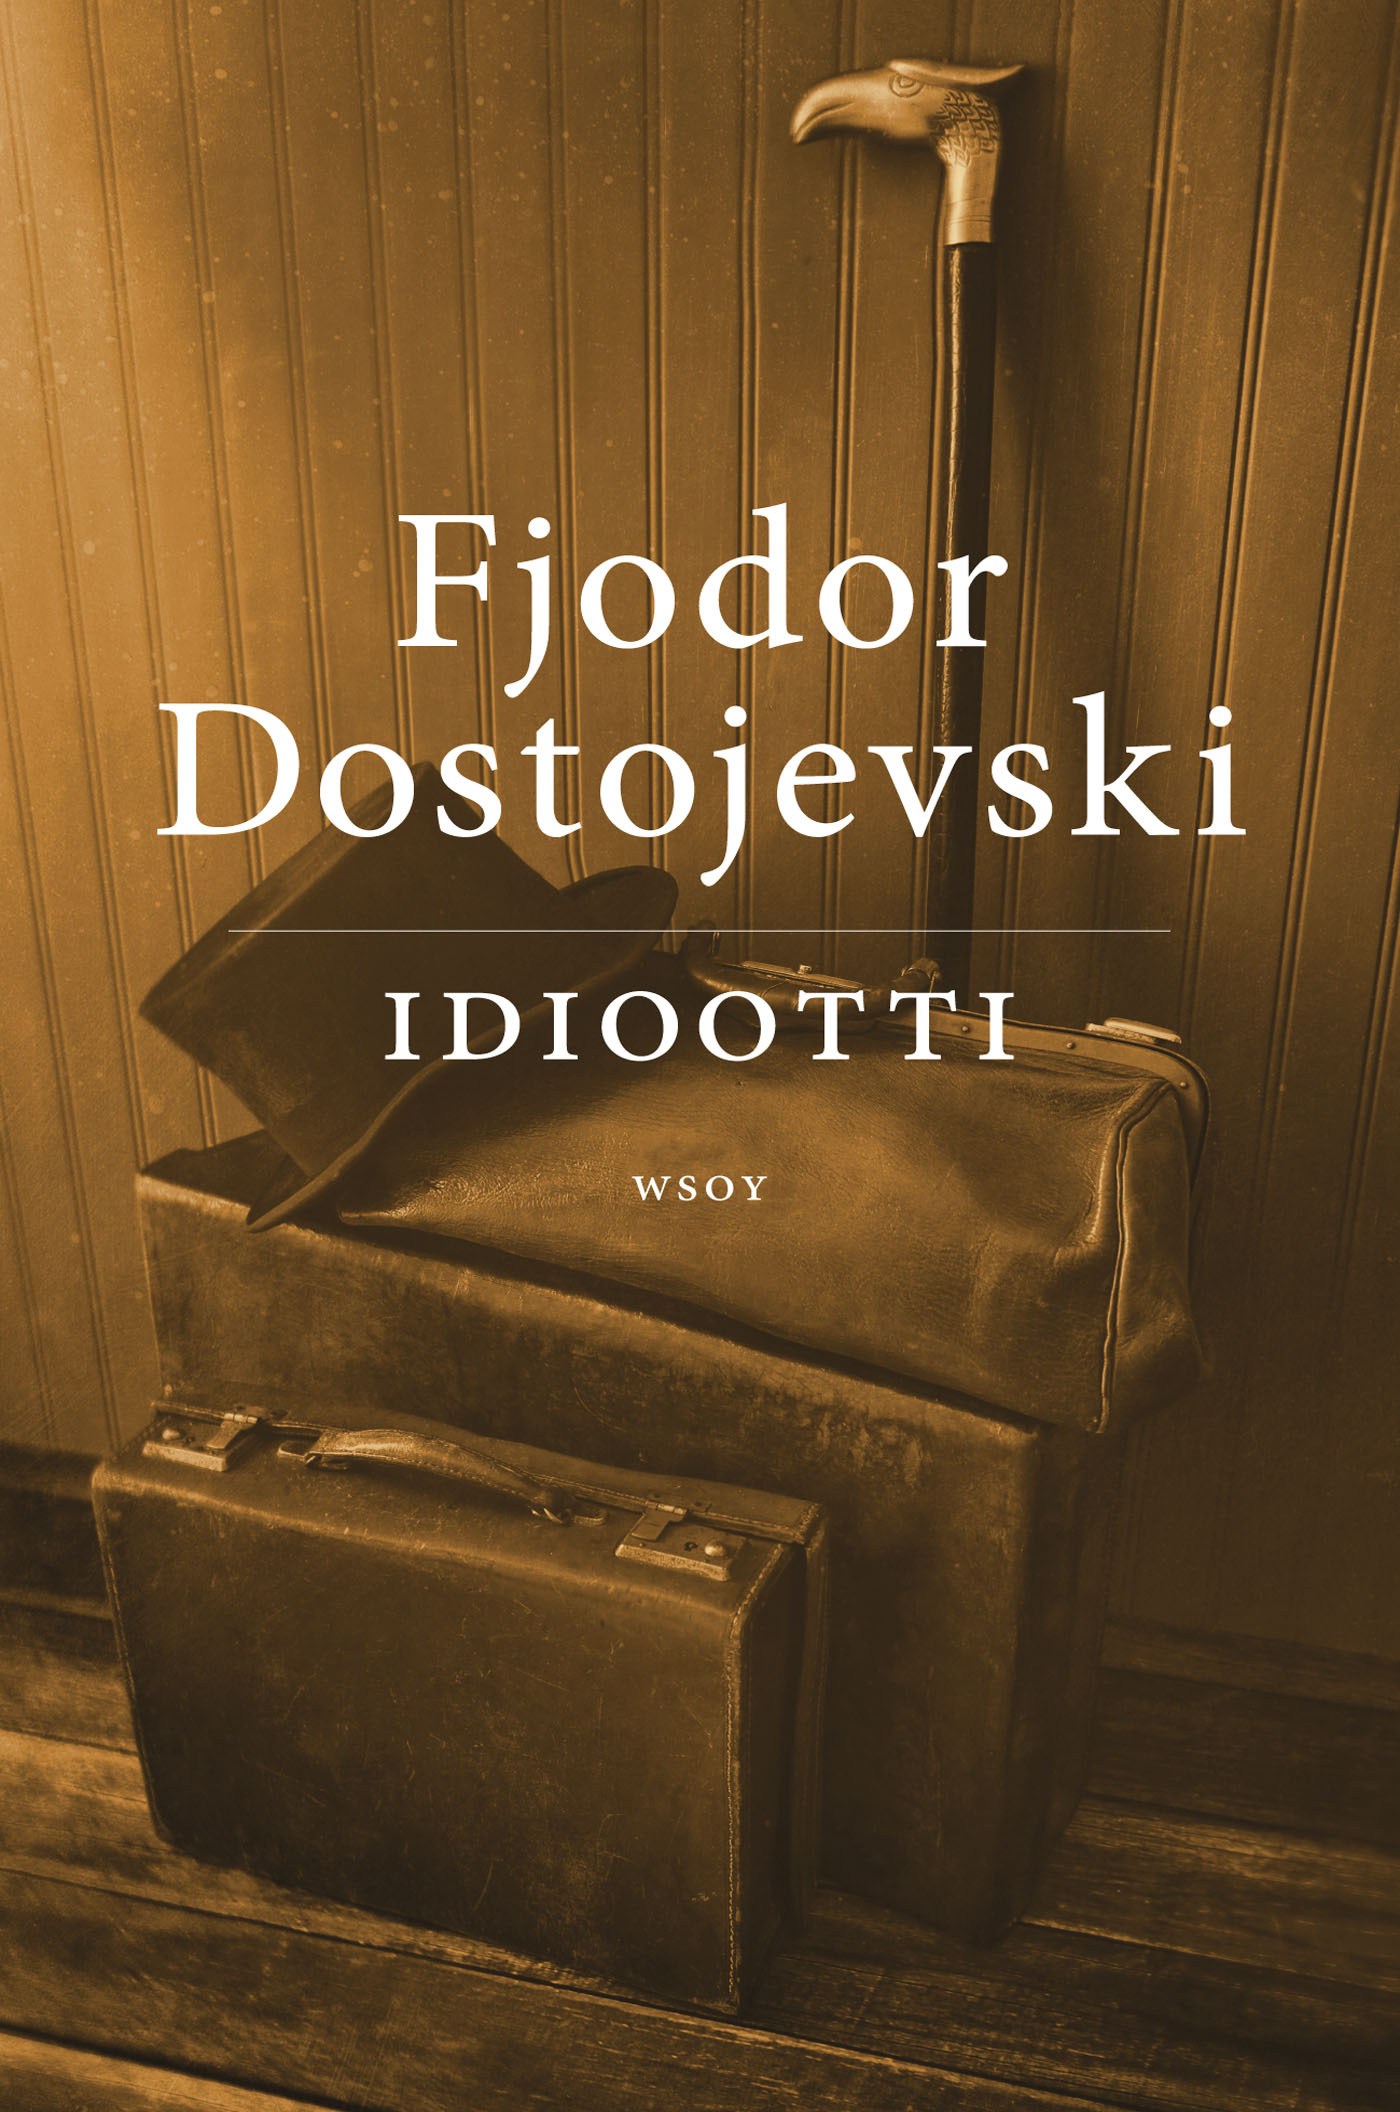 Dostojevski, Fjodor - Idiootti, e-kirja